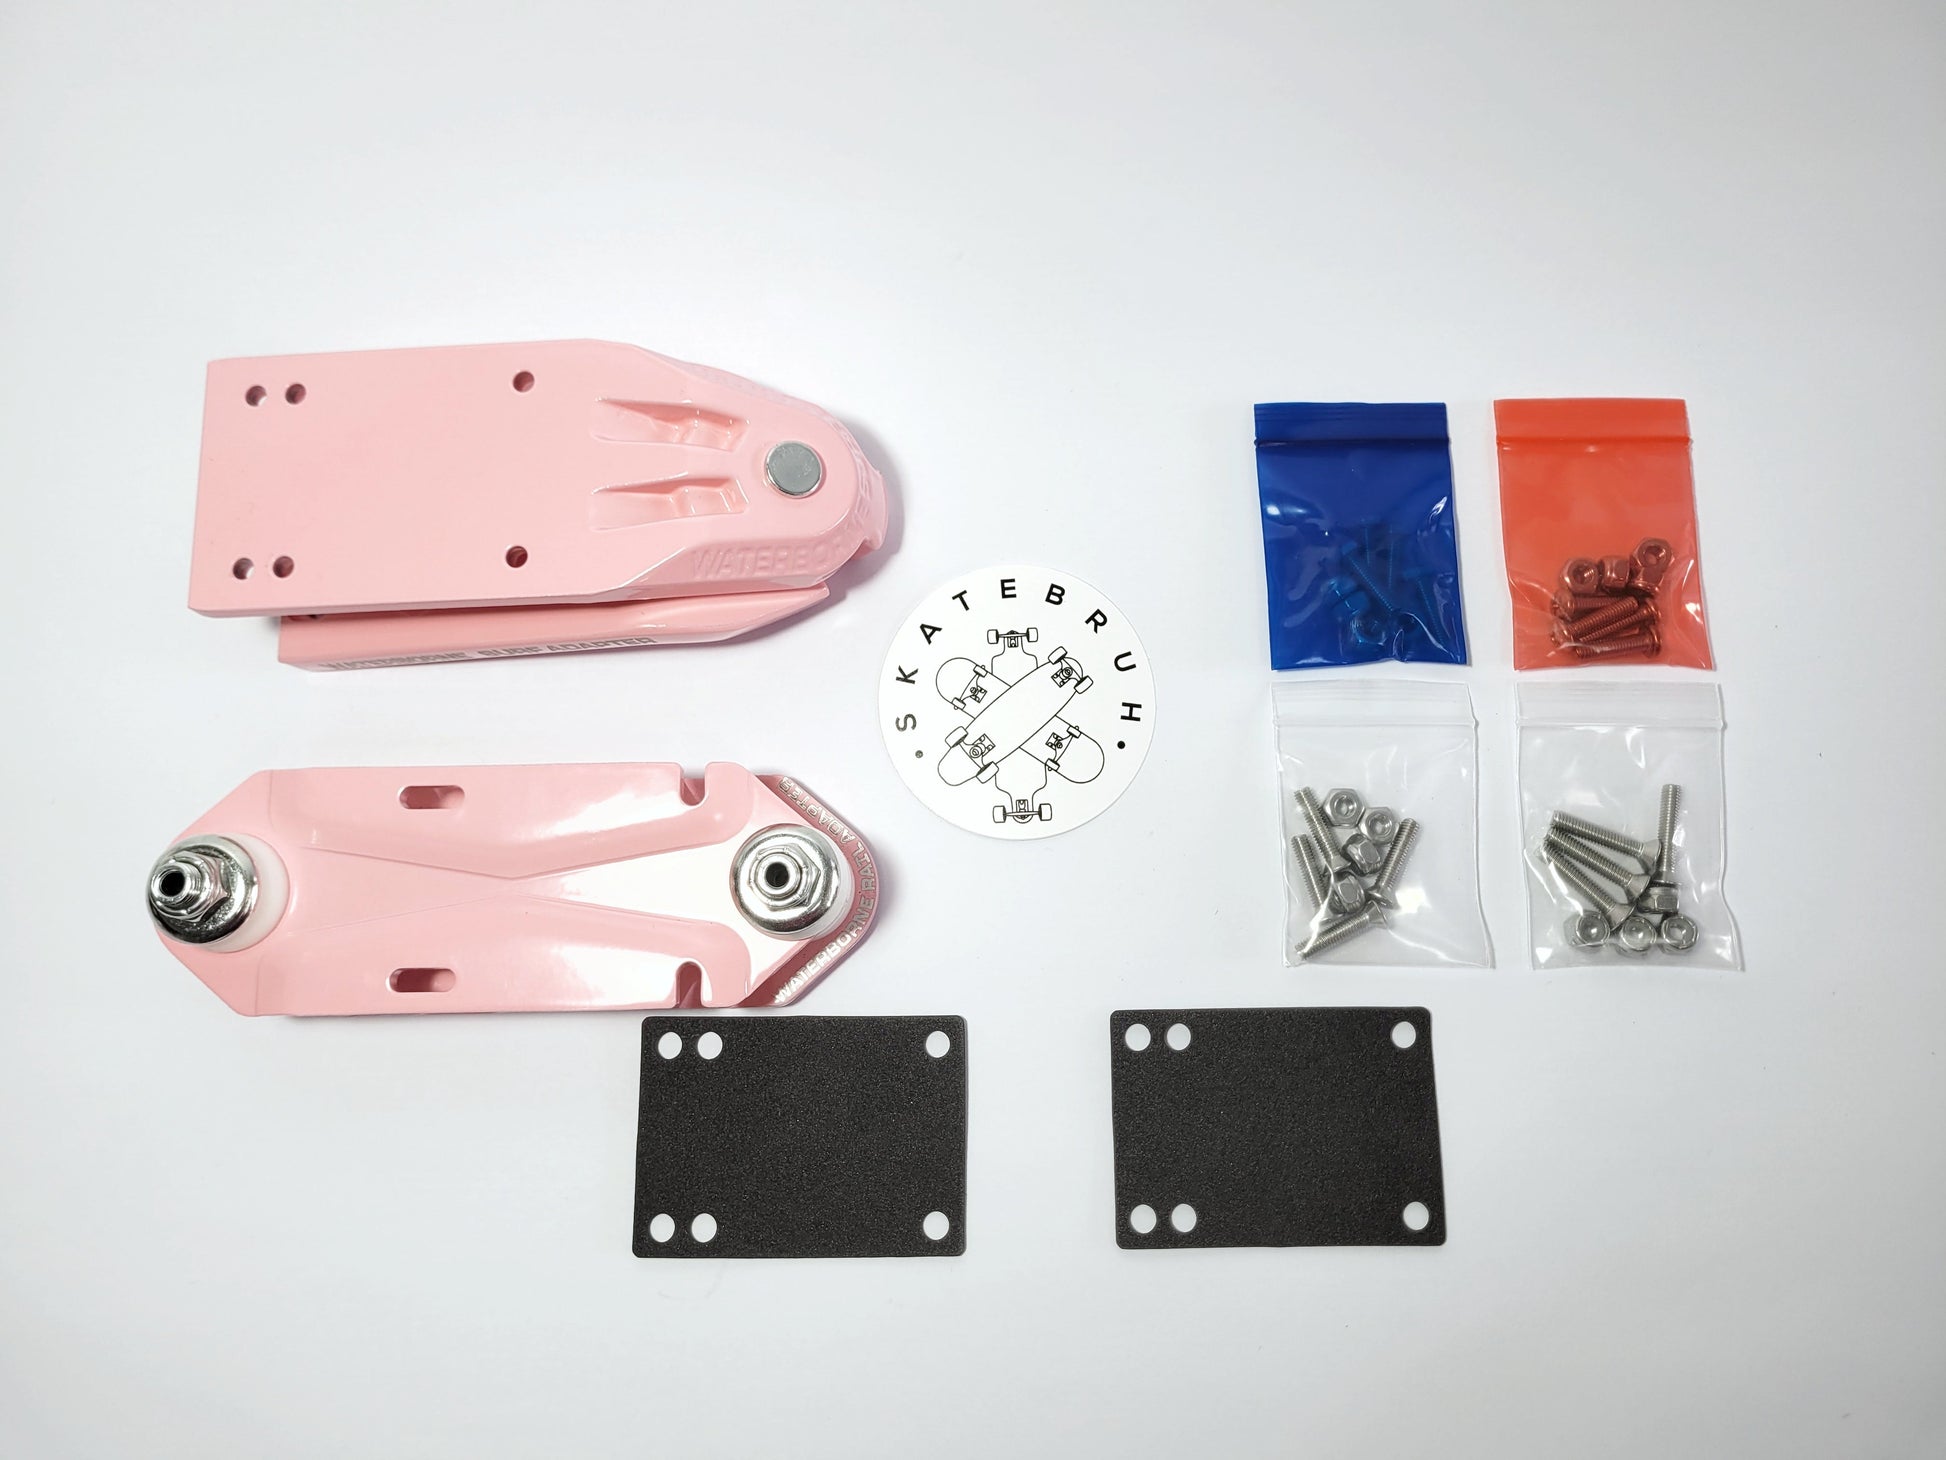 Sweet Pink Waterborne Surf Adapter high performance pack - SkatebruhSG